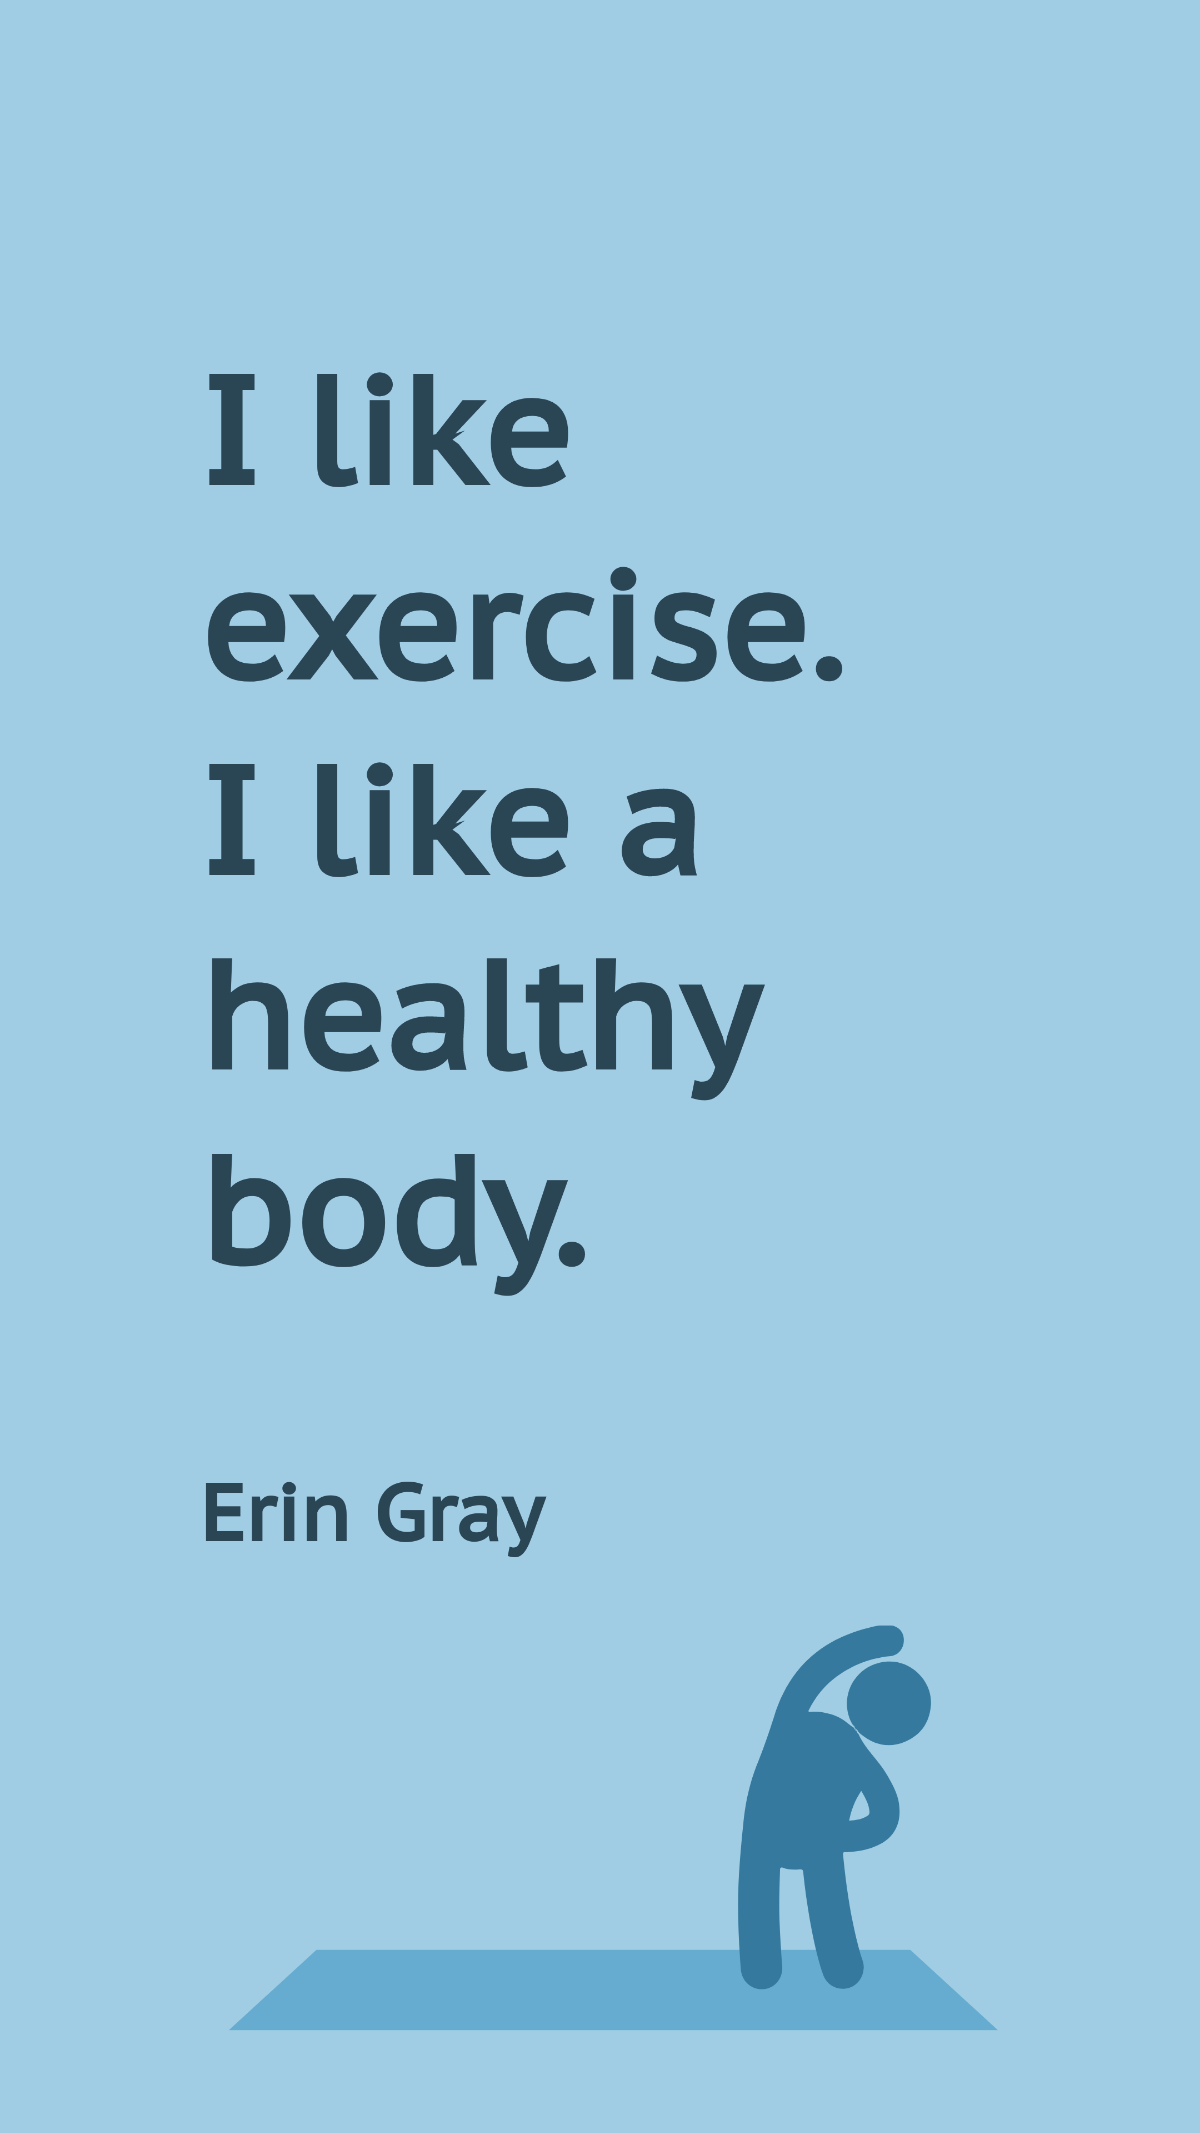 Erin Gray - I like exercise. I like a healthy body.